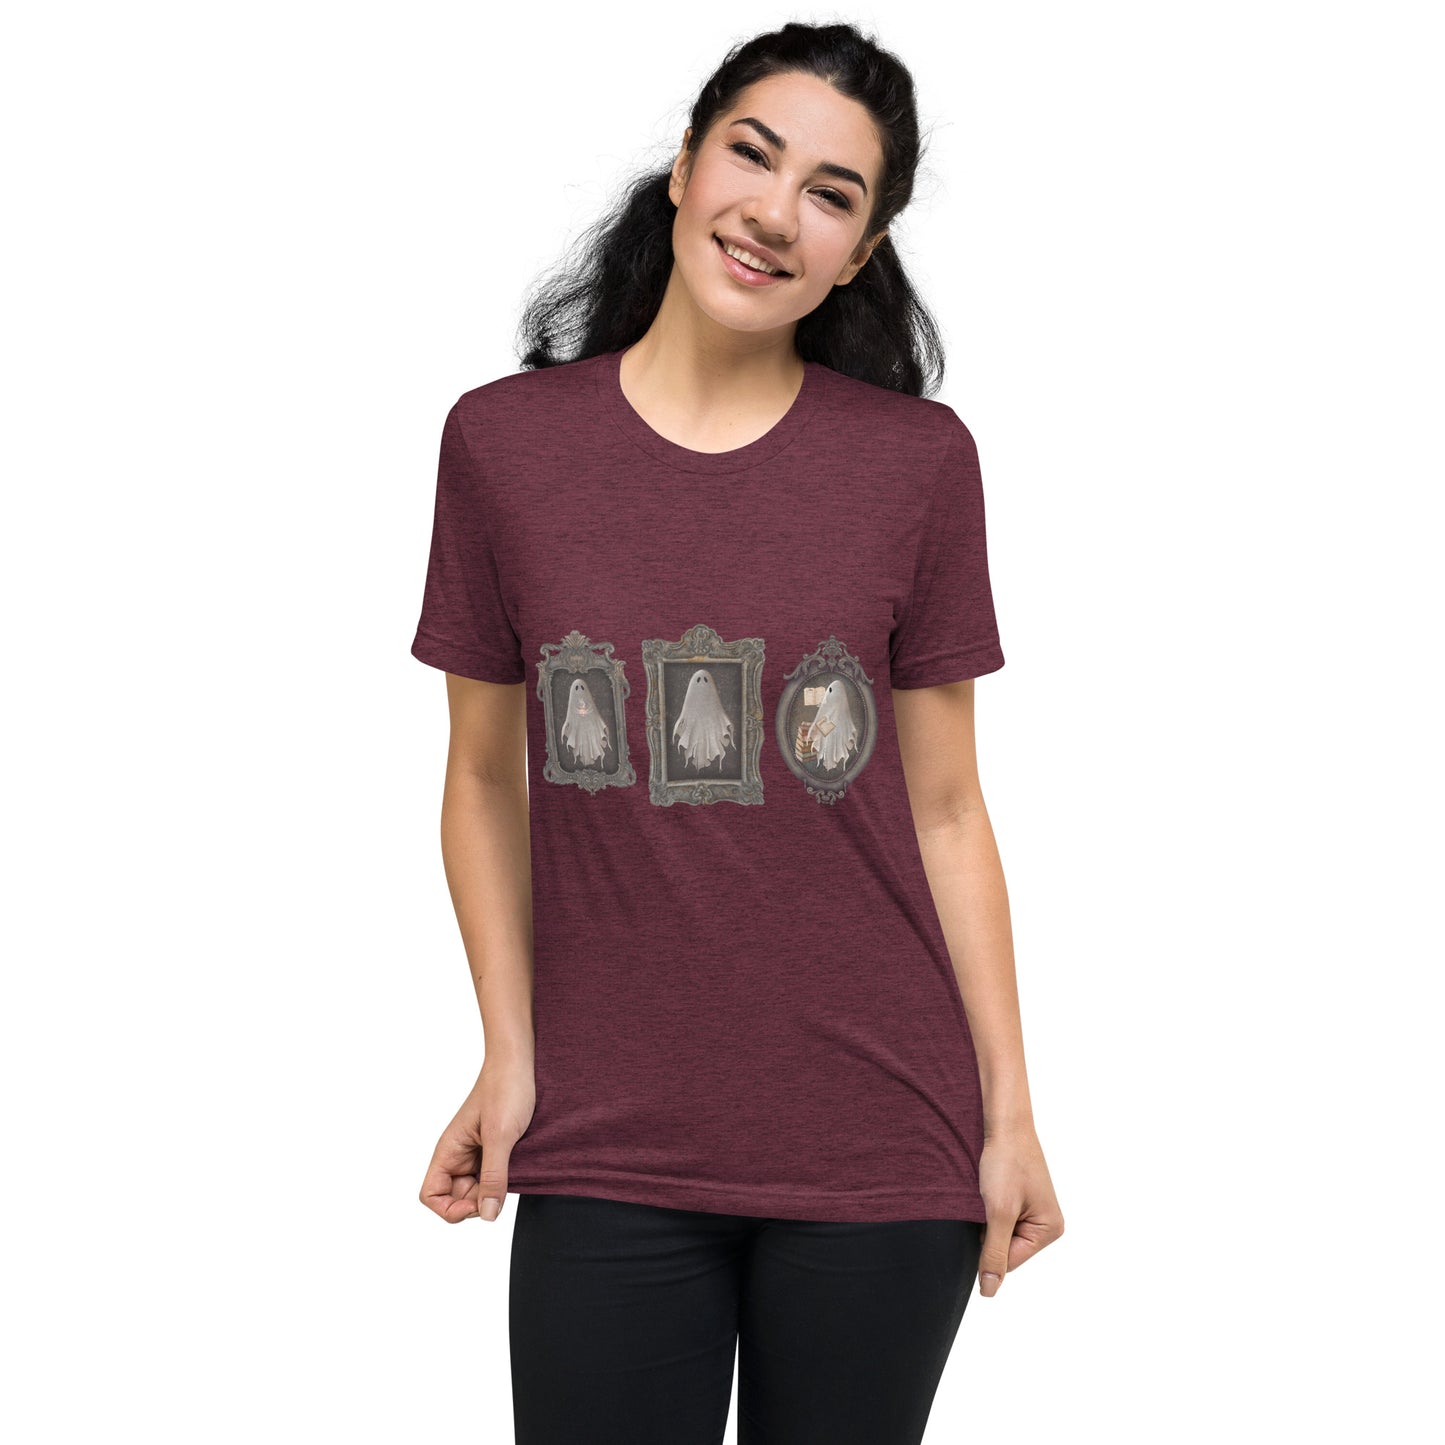 Ghosts in Frames Short sleeve t-shirt (Bella+Canvas TriBlend)